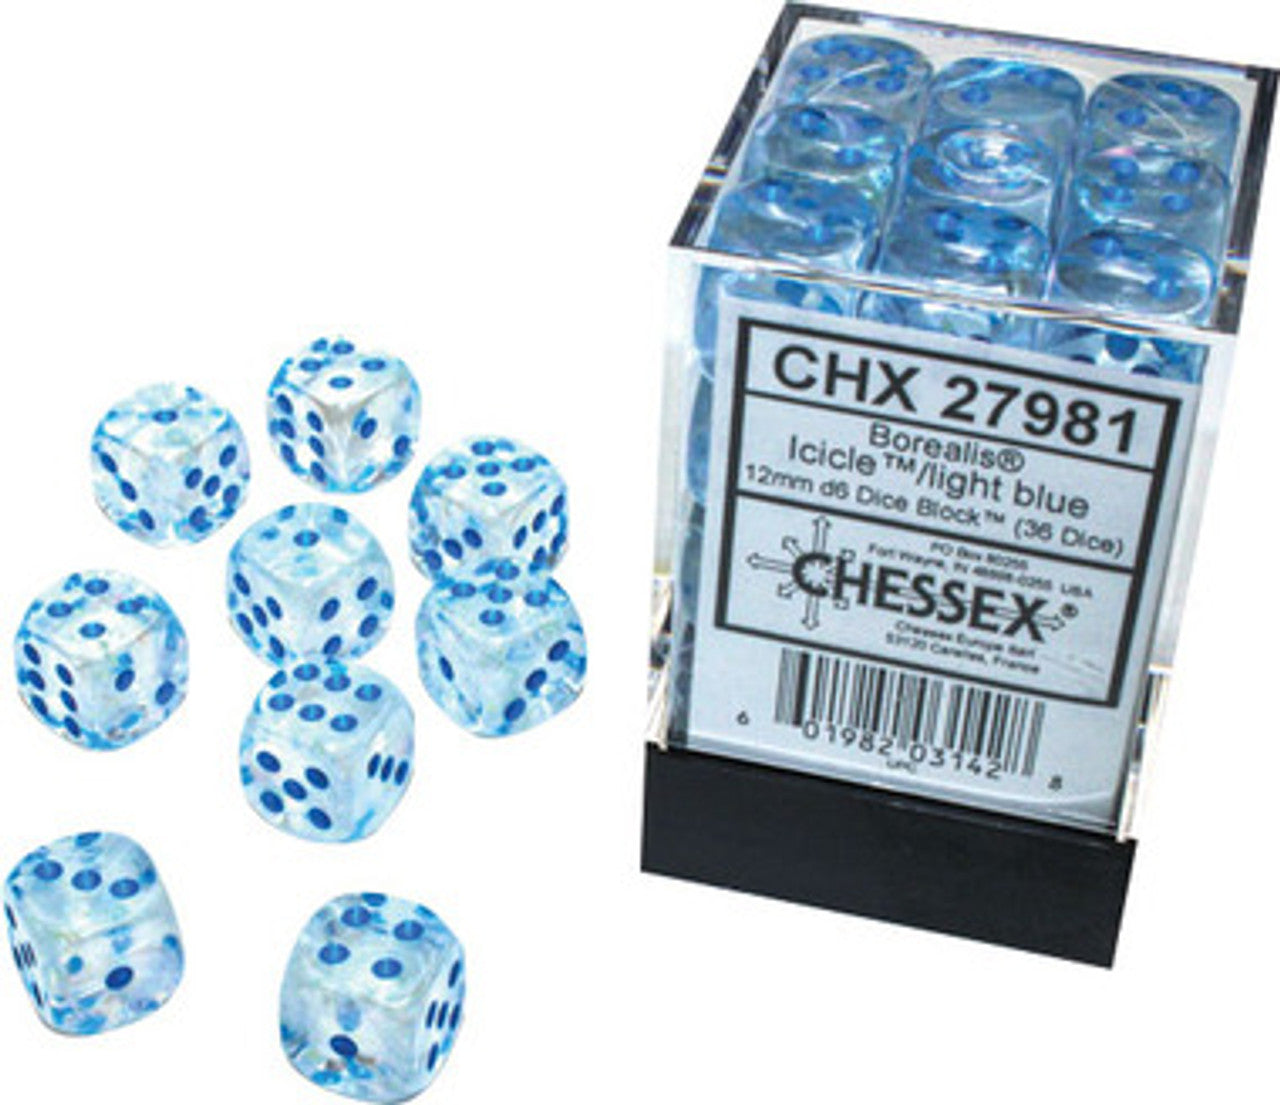 Chessex Dice: Borealis - 12mm d6 Icicle/Light Blue Luminary (36)